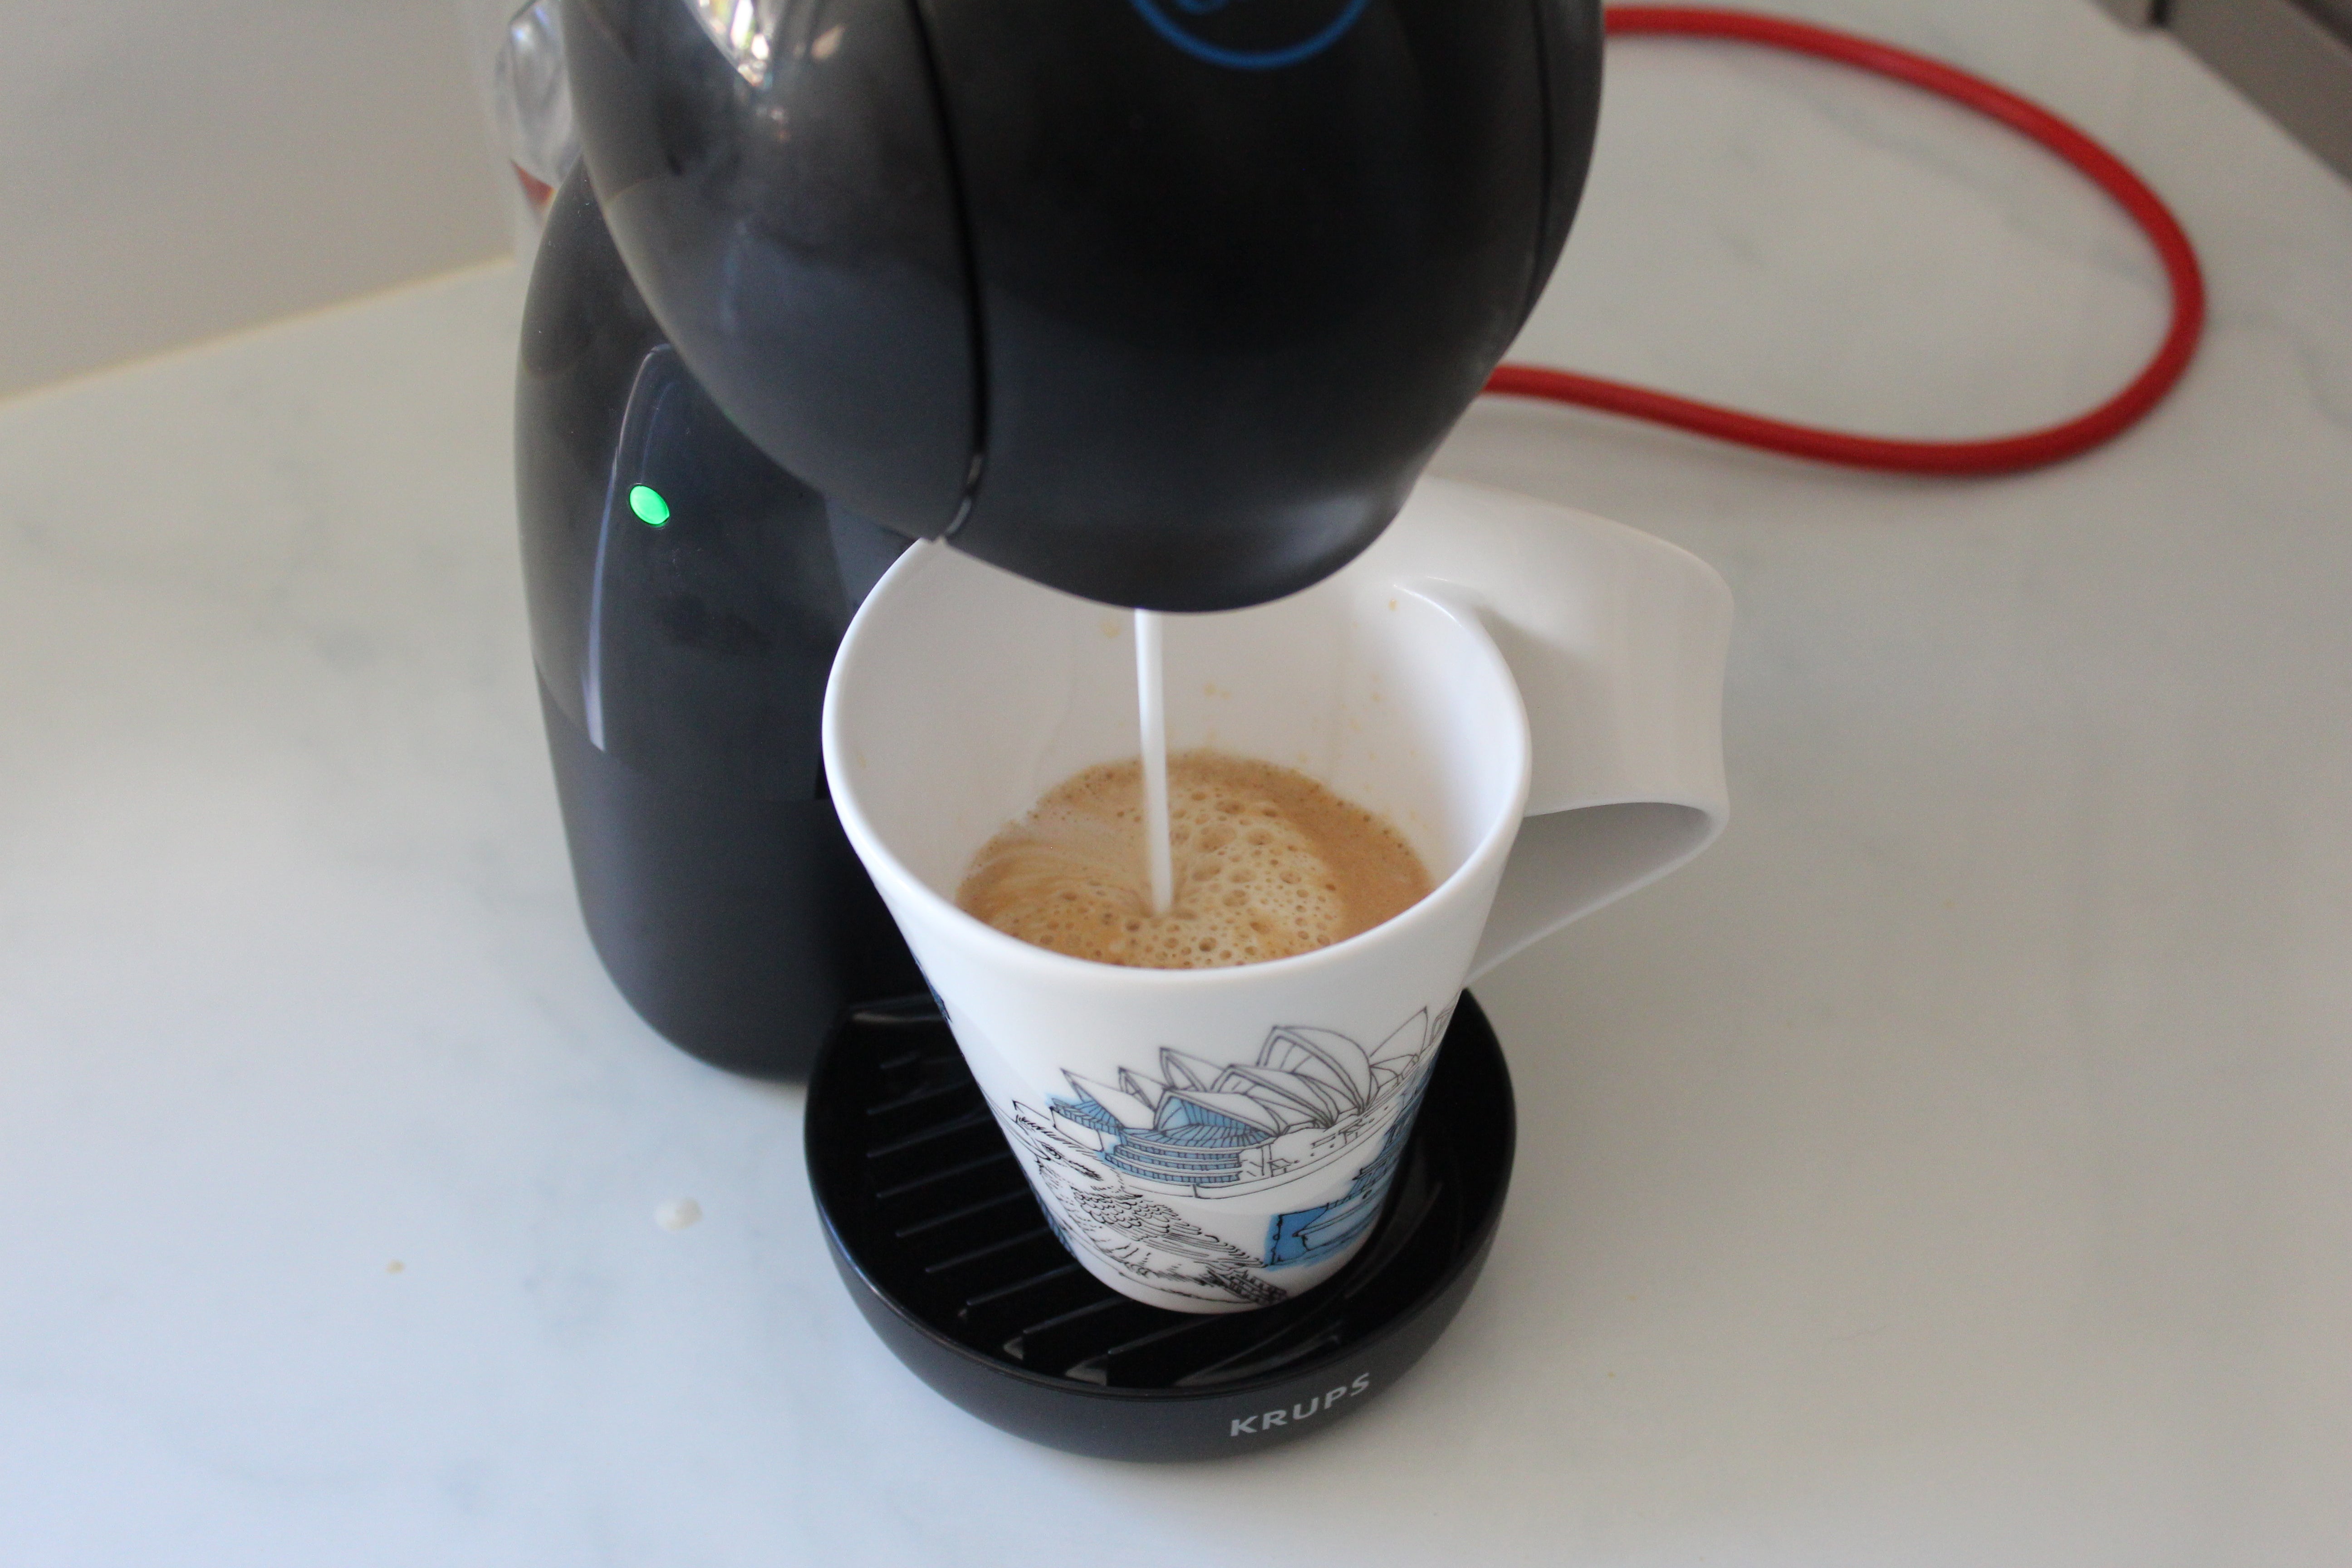 Nescafé Dolce Gusto Piccolo XS milkA coffee mug being filled from Nescafe Dolce Gusto Piccolo XS standing on a table